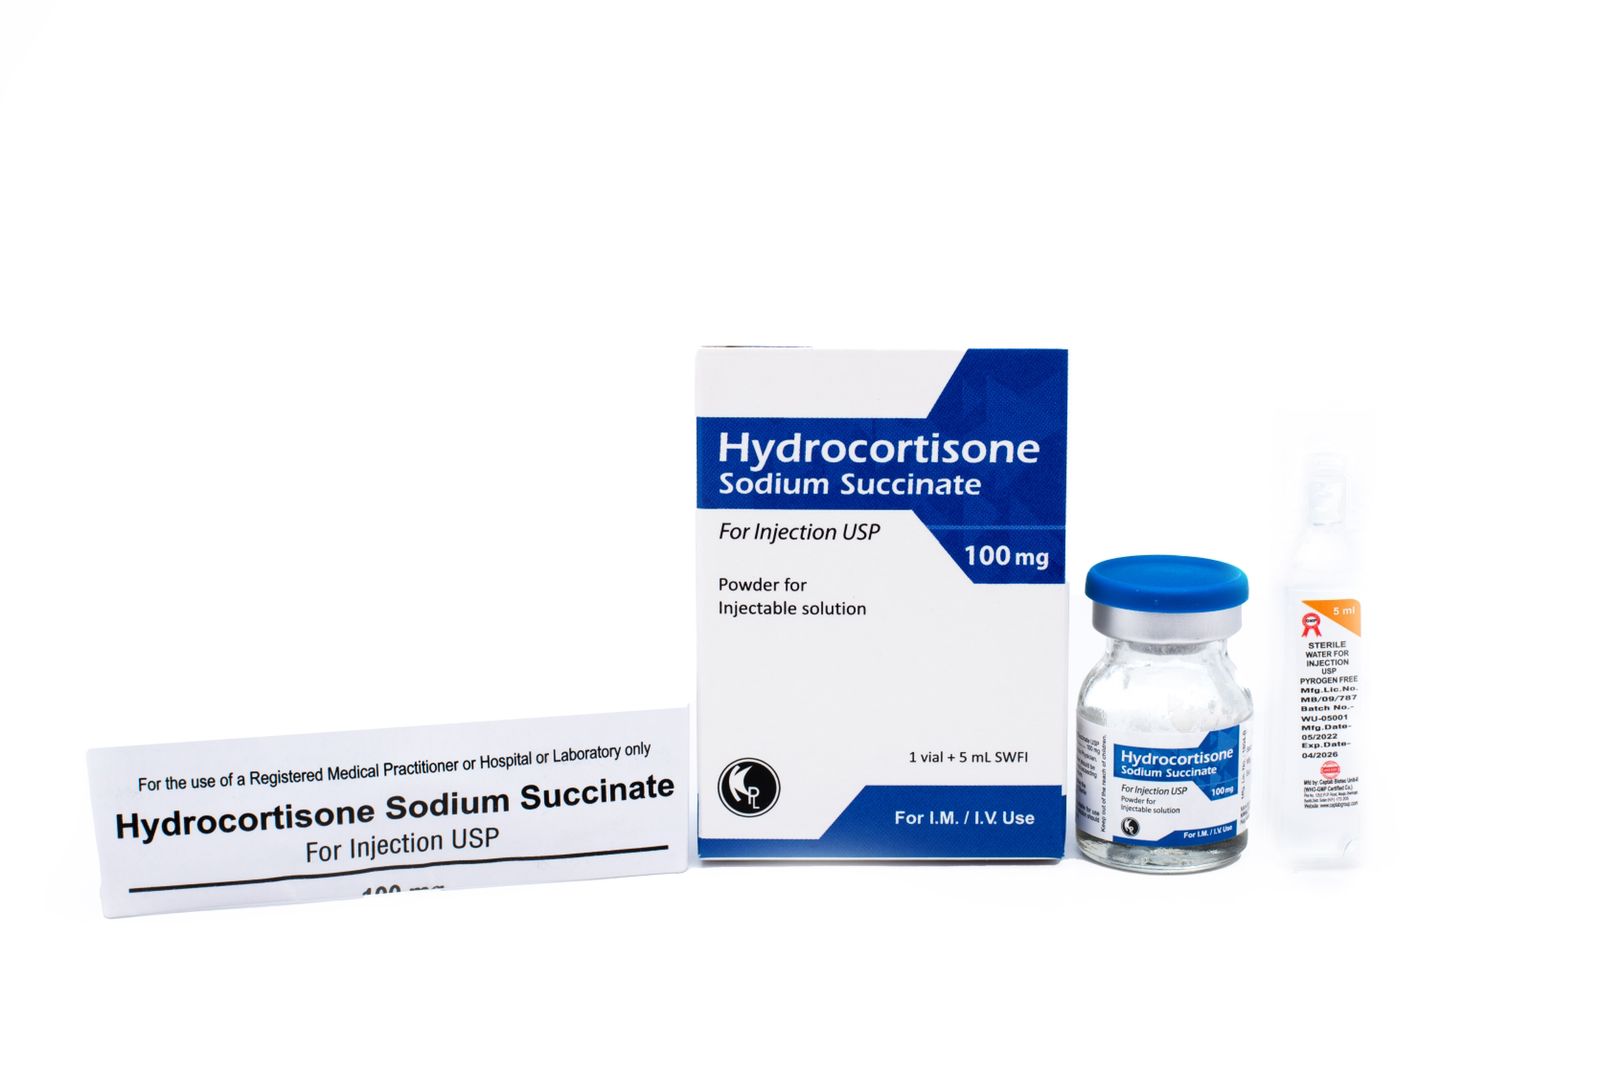 Hydrocortisone Sodium Succinate Injection